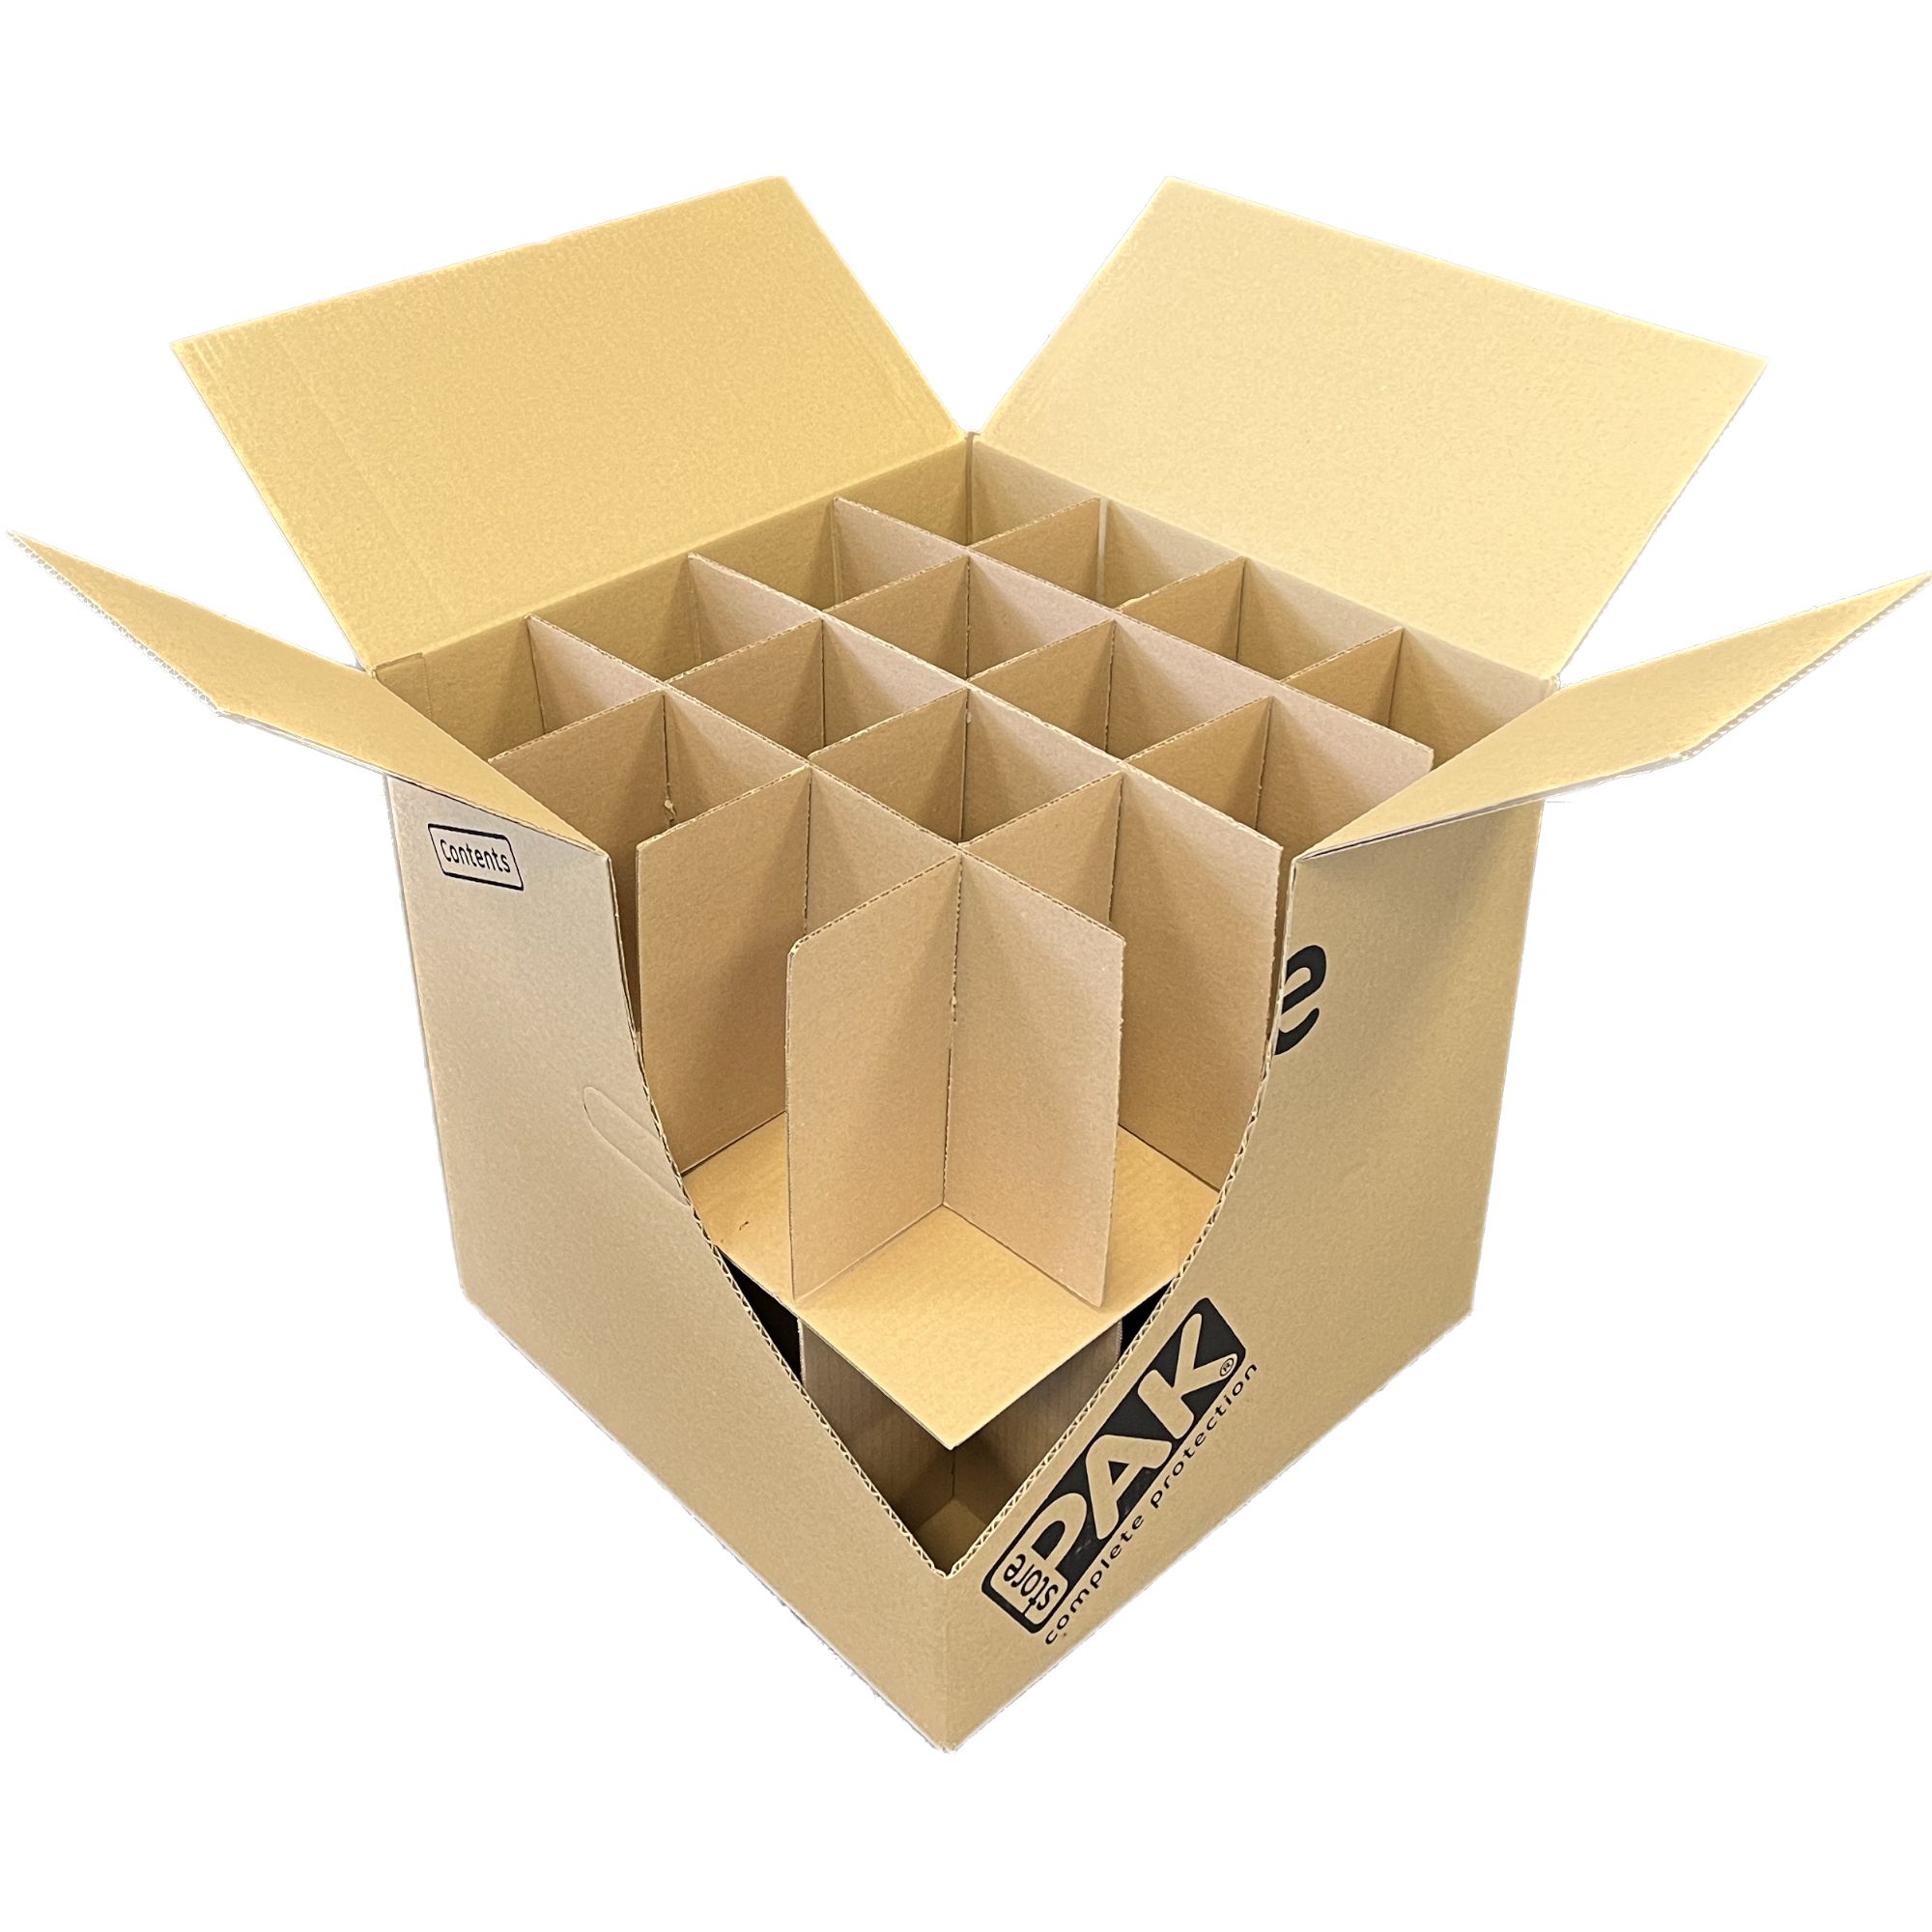 StorePAK Eco Large Cardboard Glass Moving box